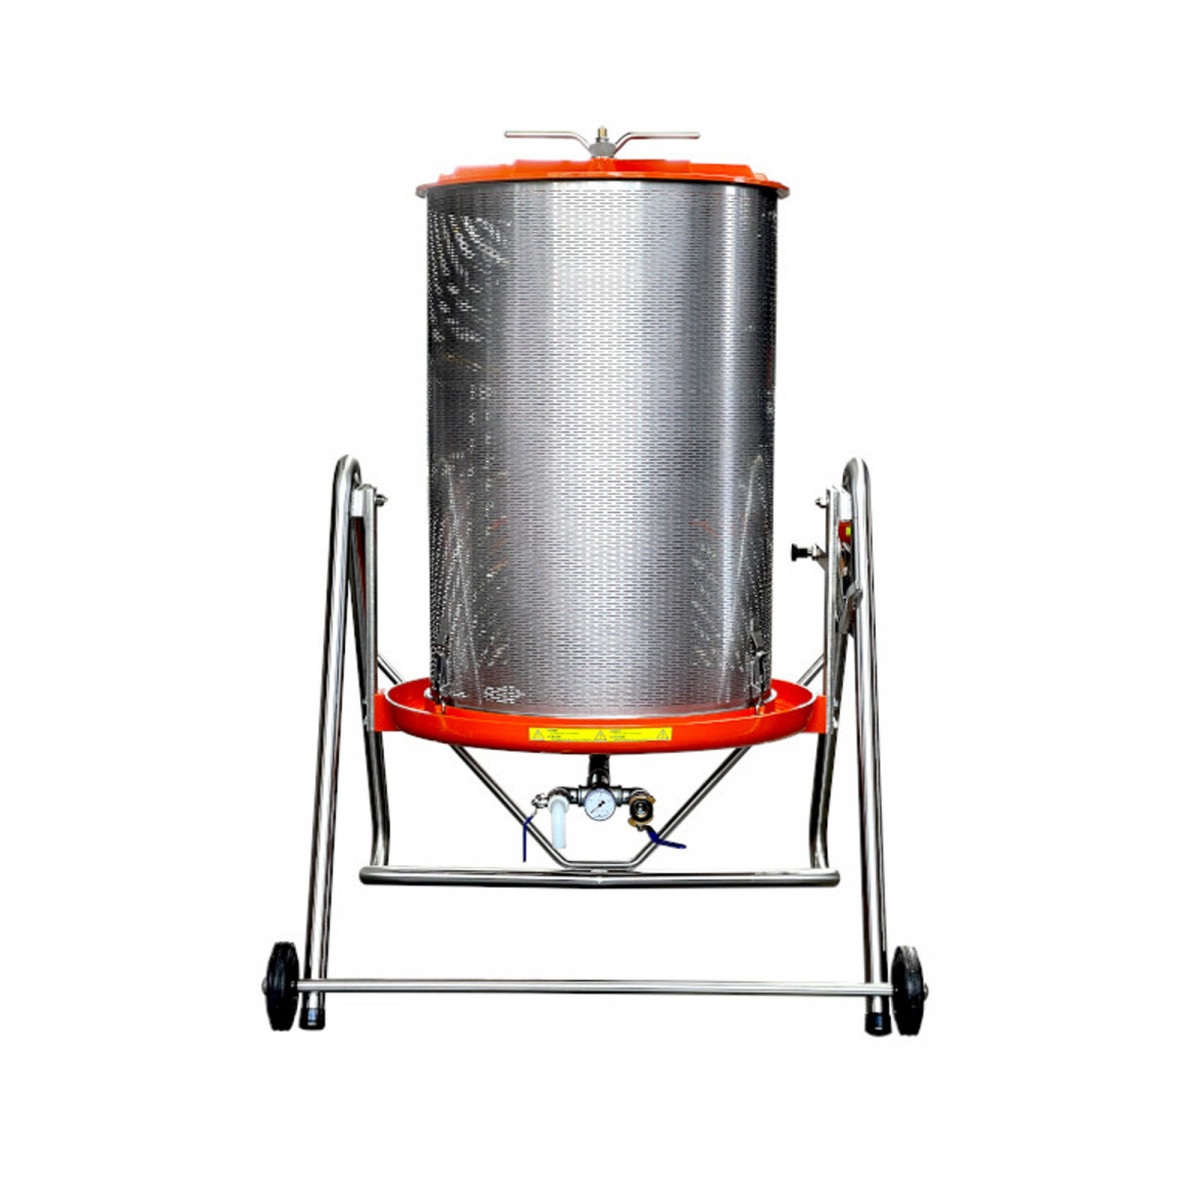 Speidel hydraulic press 180 l stainless steel basket + press bag